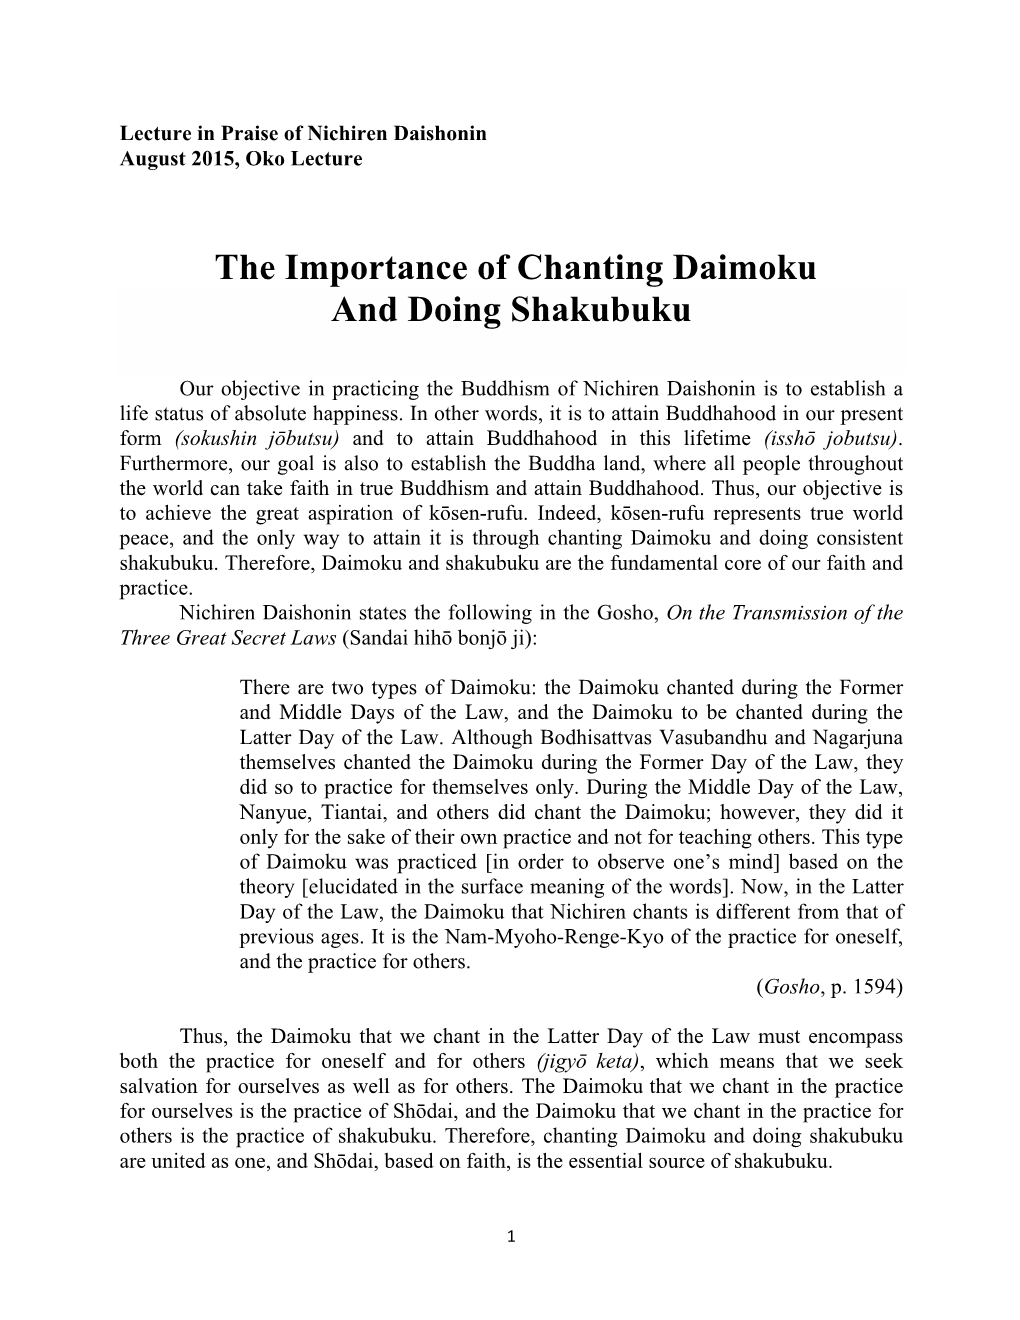 The Importance of Chanting Daimoku and Doing Shakubuku